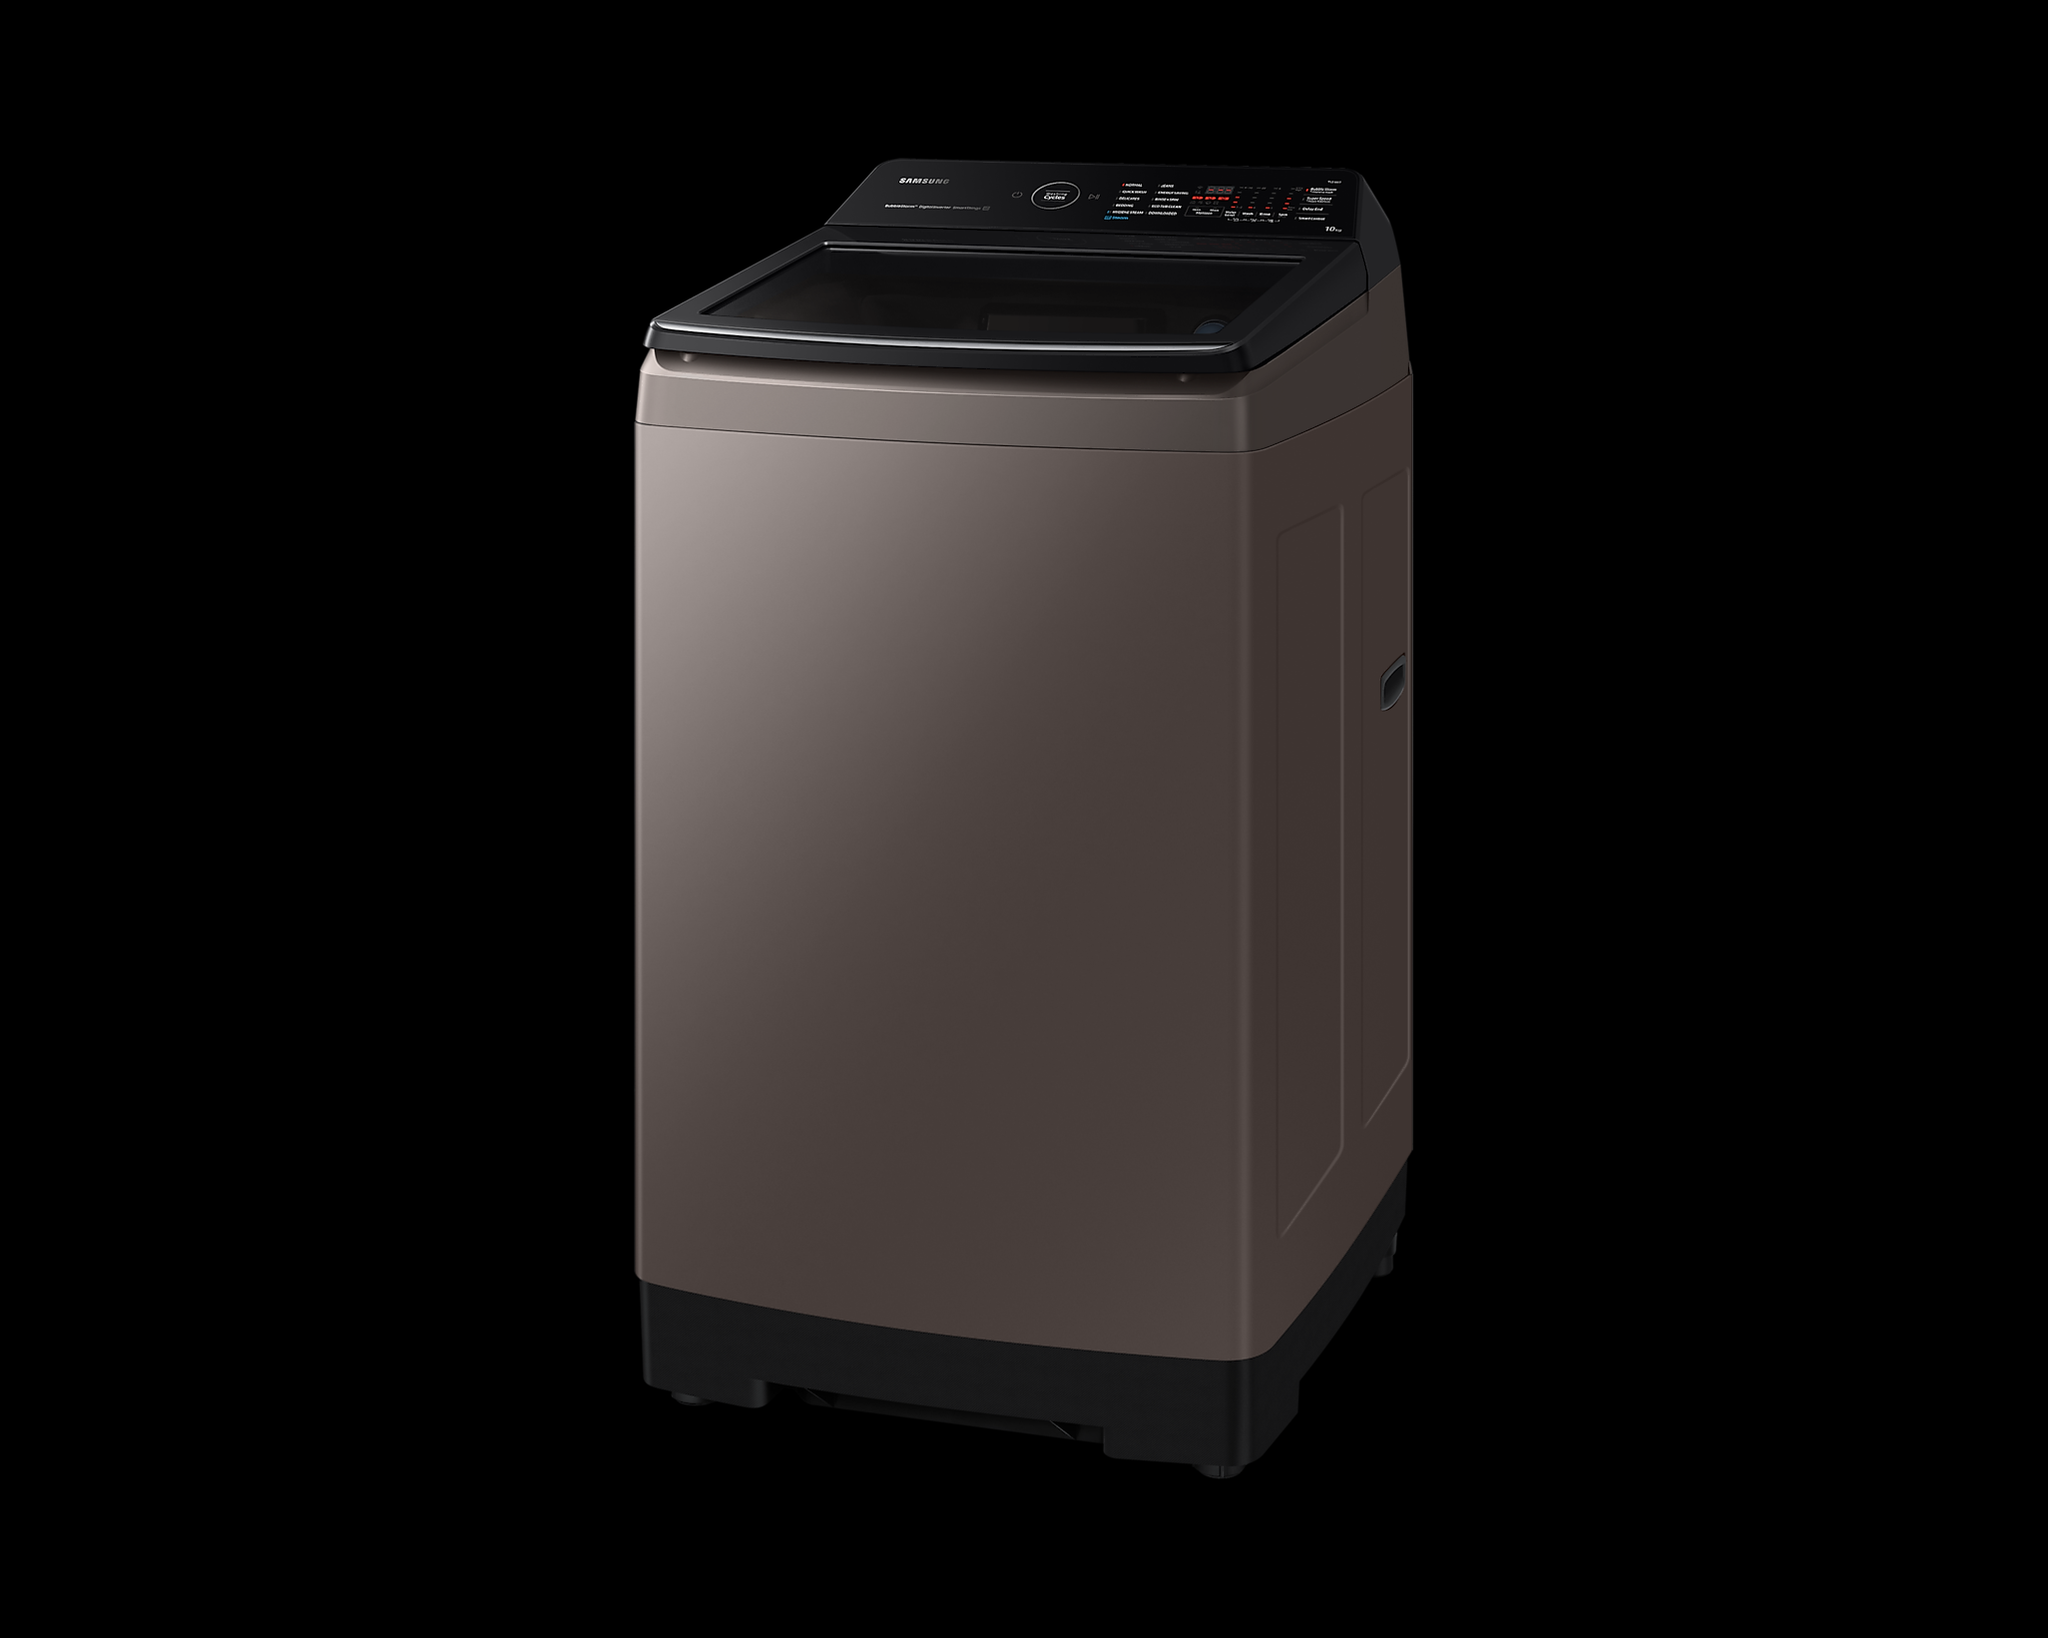 SAMSUNG 10 kg Fully Automatic Top Load Washing Machine WA10BG4686BRTL, In-built Heater, Rose Brown